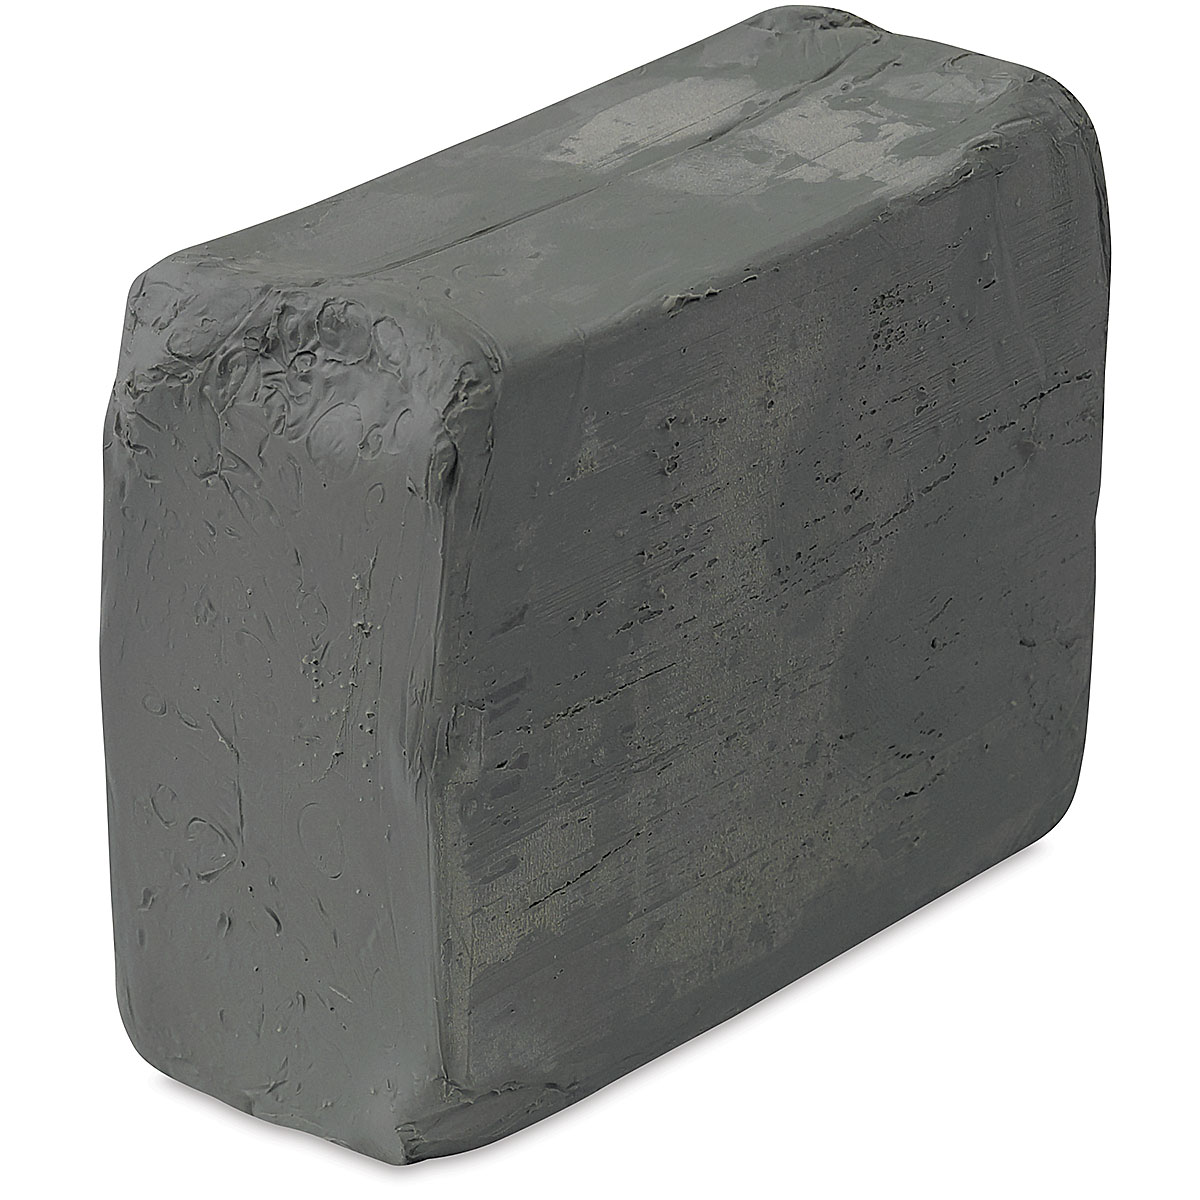 ROMA #4 Plastilina 40lb case (20 2lb bricks) - The Compleat Sculptor